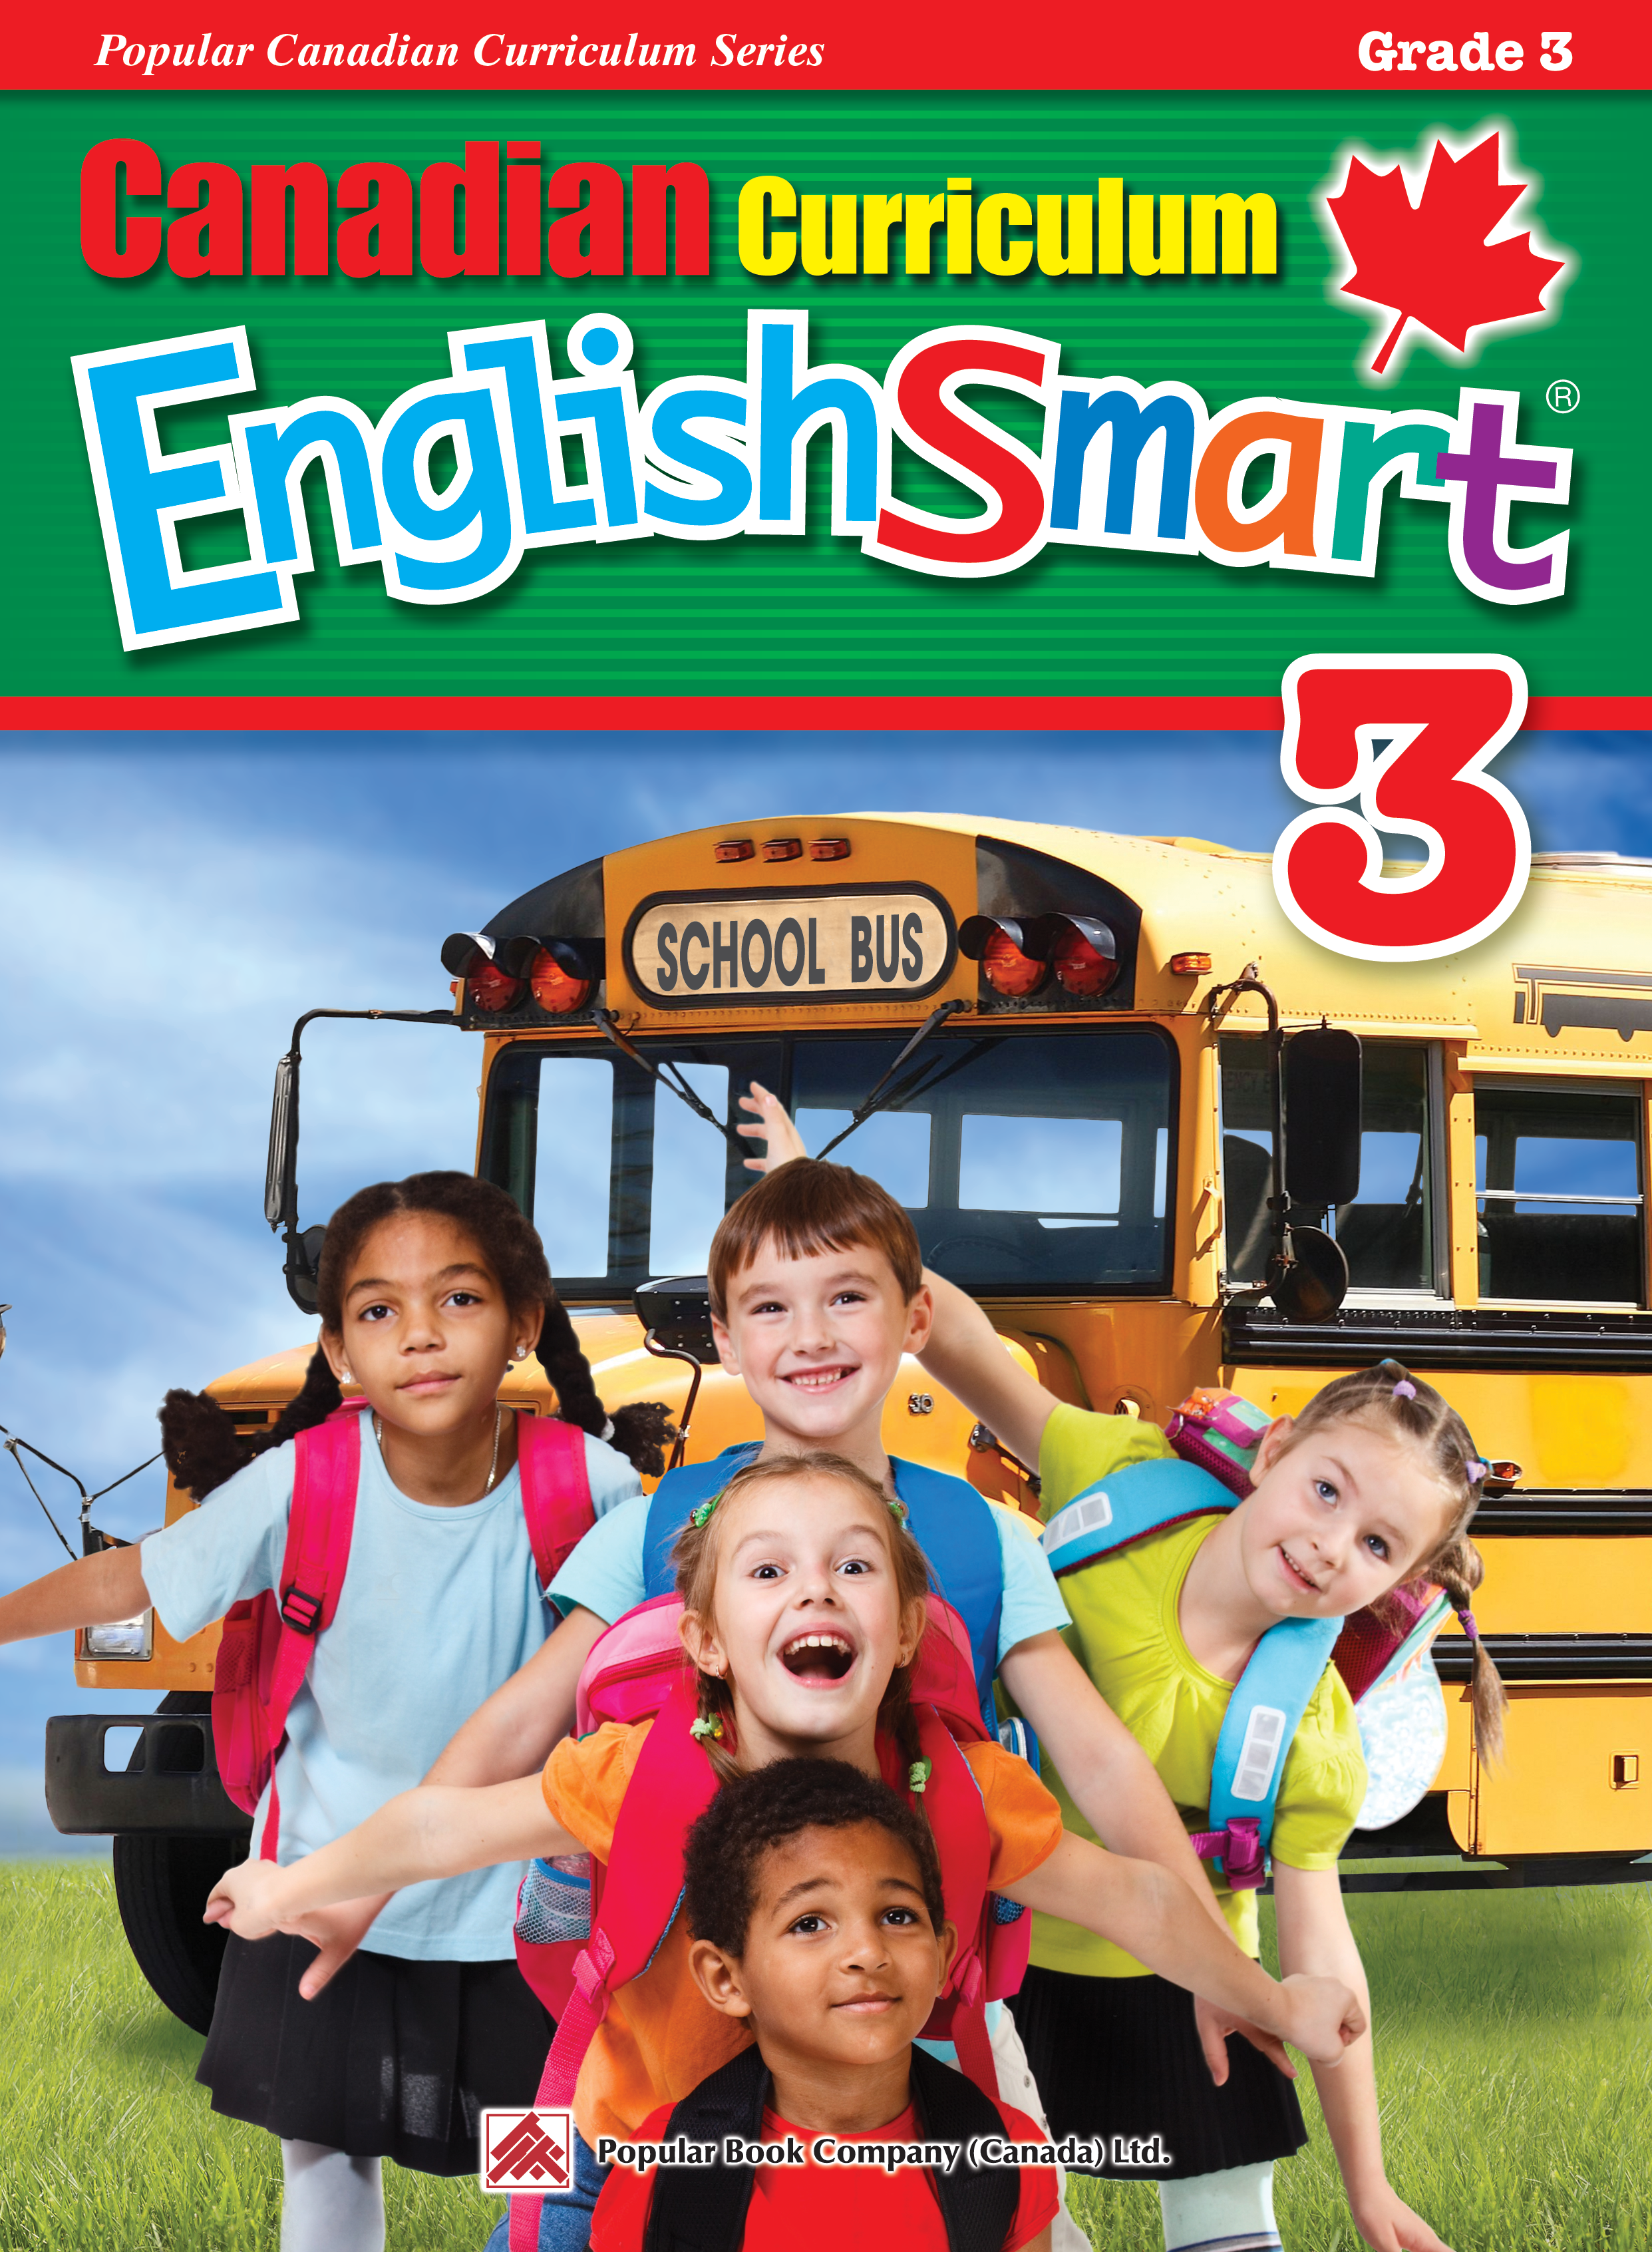 Canadian Curriculum Englishsmart Grade 3 Book Popular Book Company Canada Ltd 9538